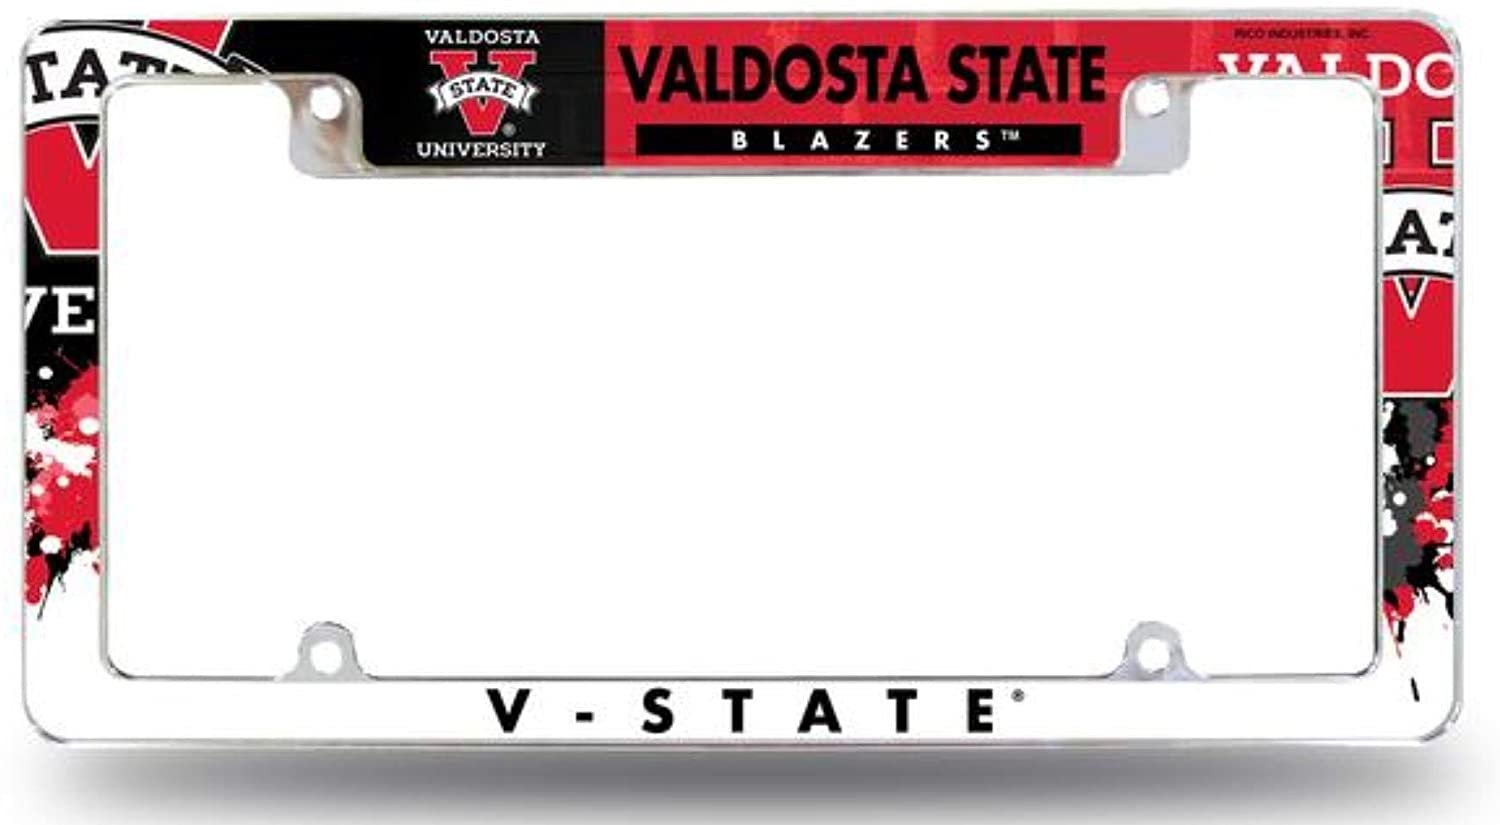 Valdosta State University Blazers Metal License Plate Frame Tag Cover, All Over Design, 12x6 Inch